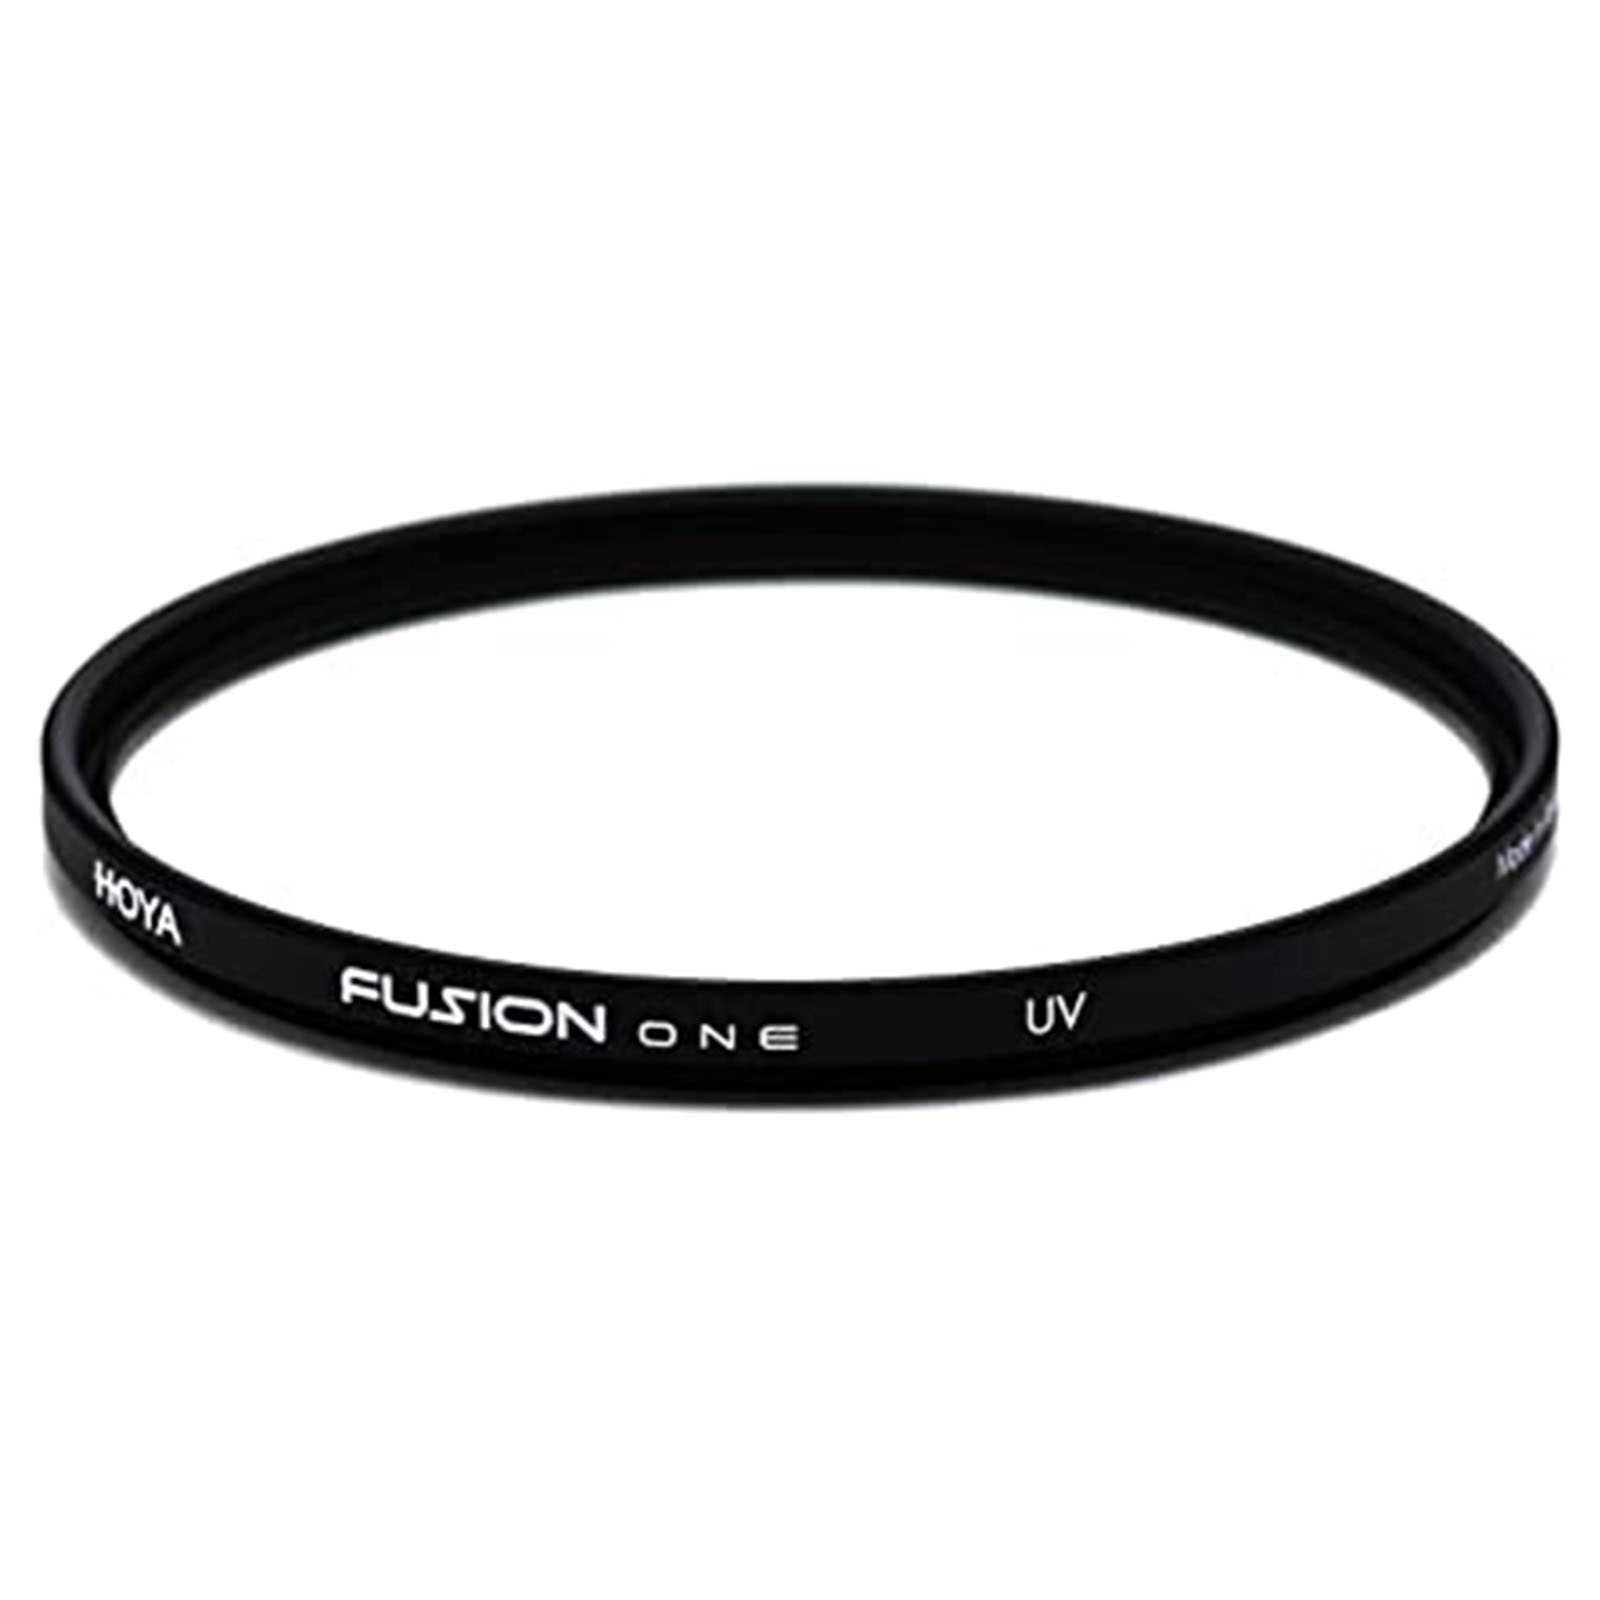 Image of Hoya 405mm Fusion One Next UV Filter